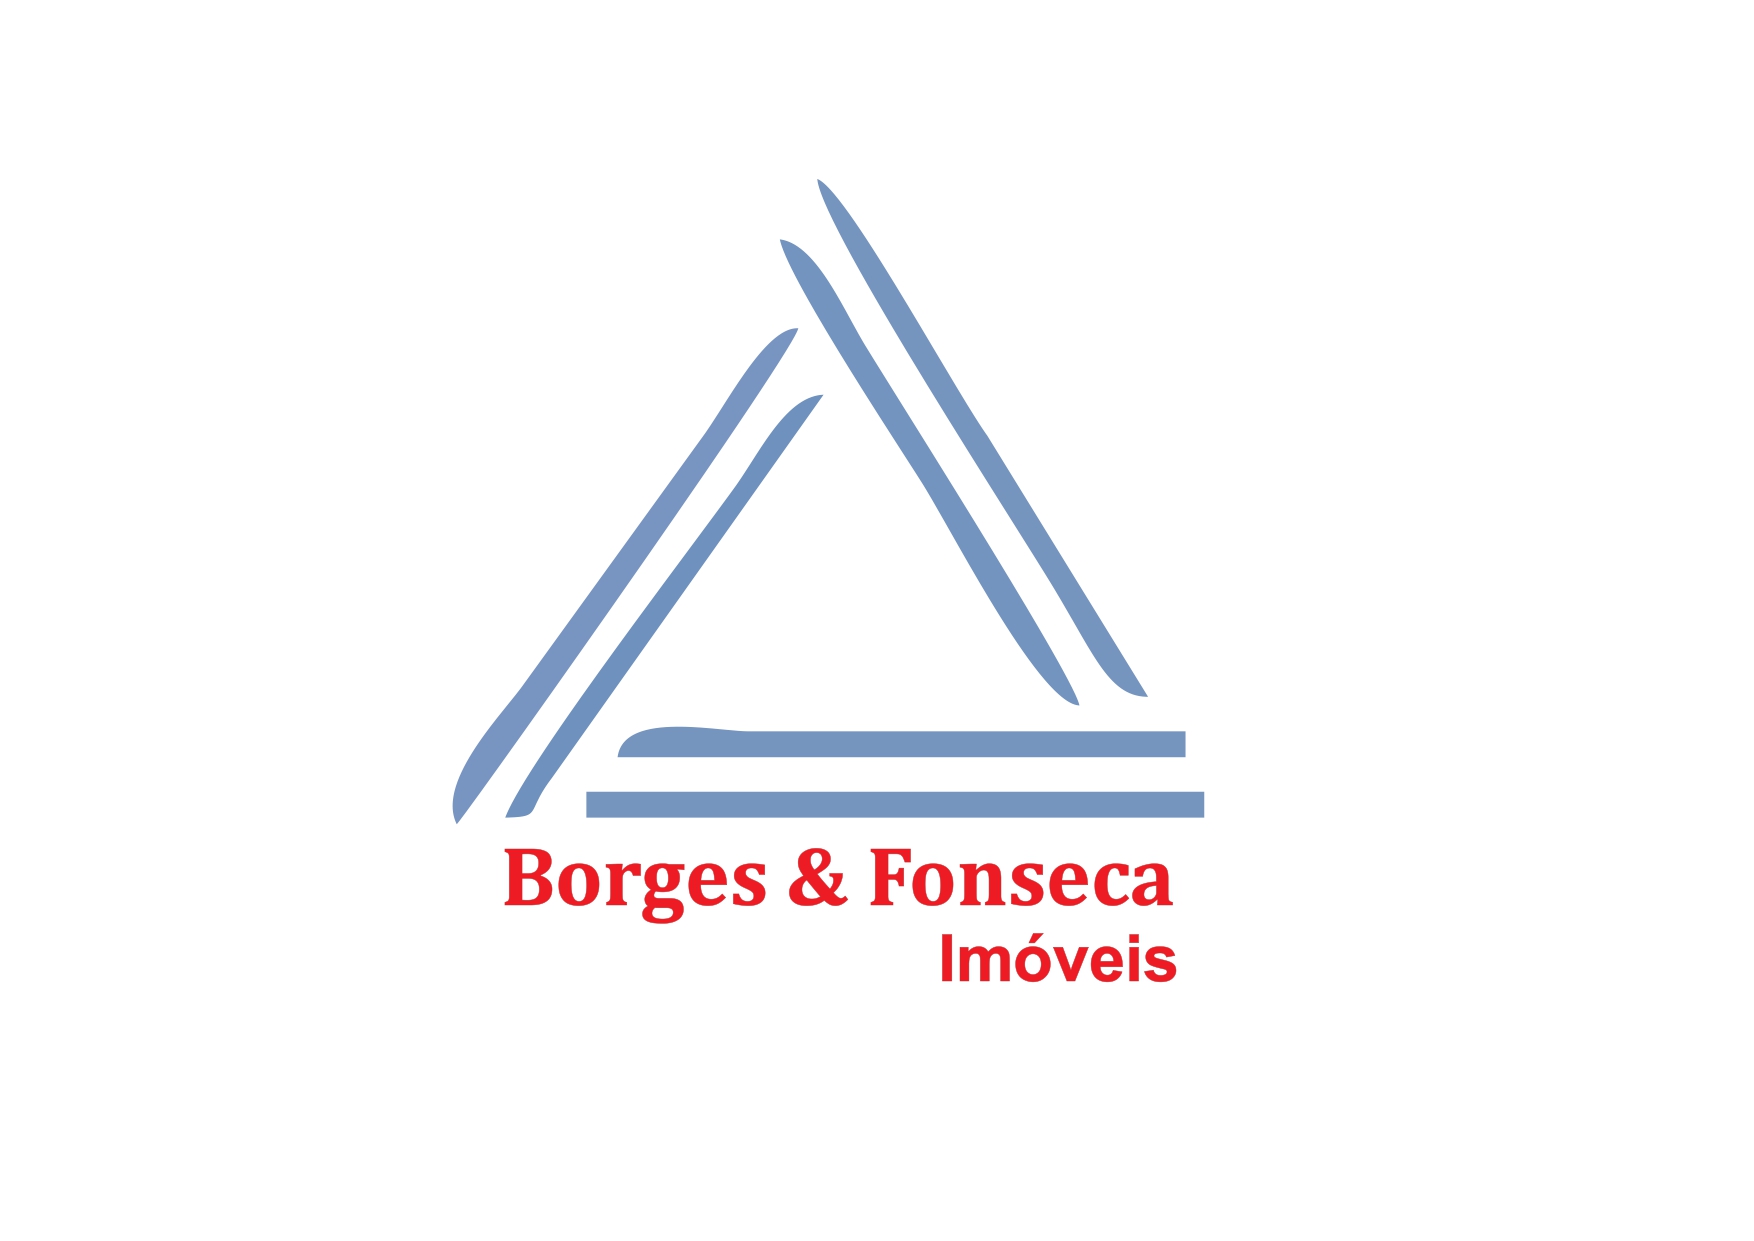 BORGES & FONSECA IMOVEIS